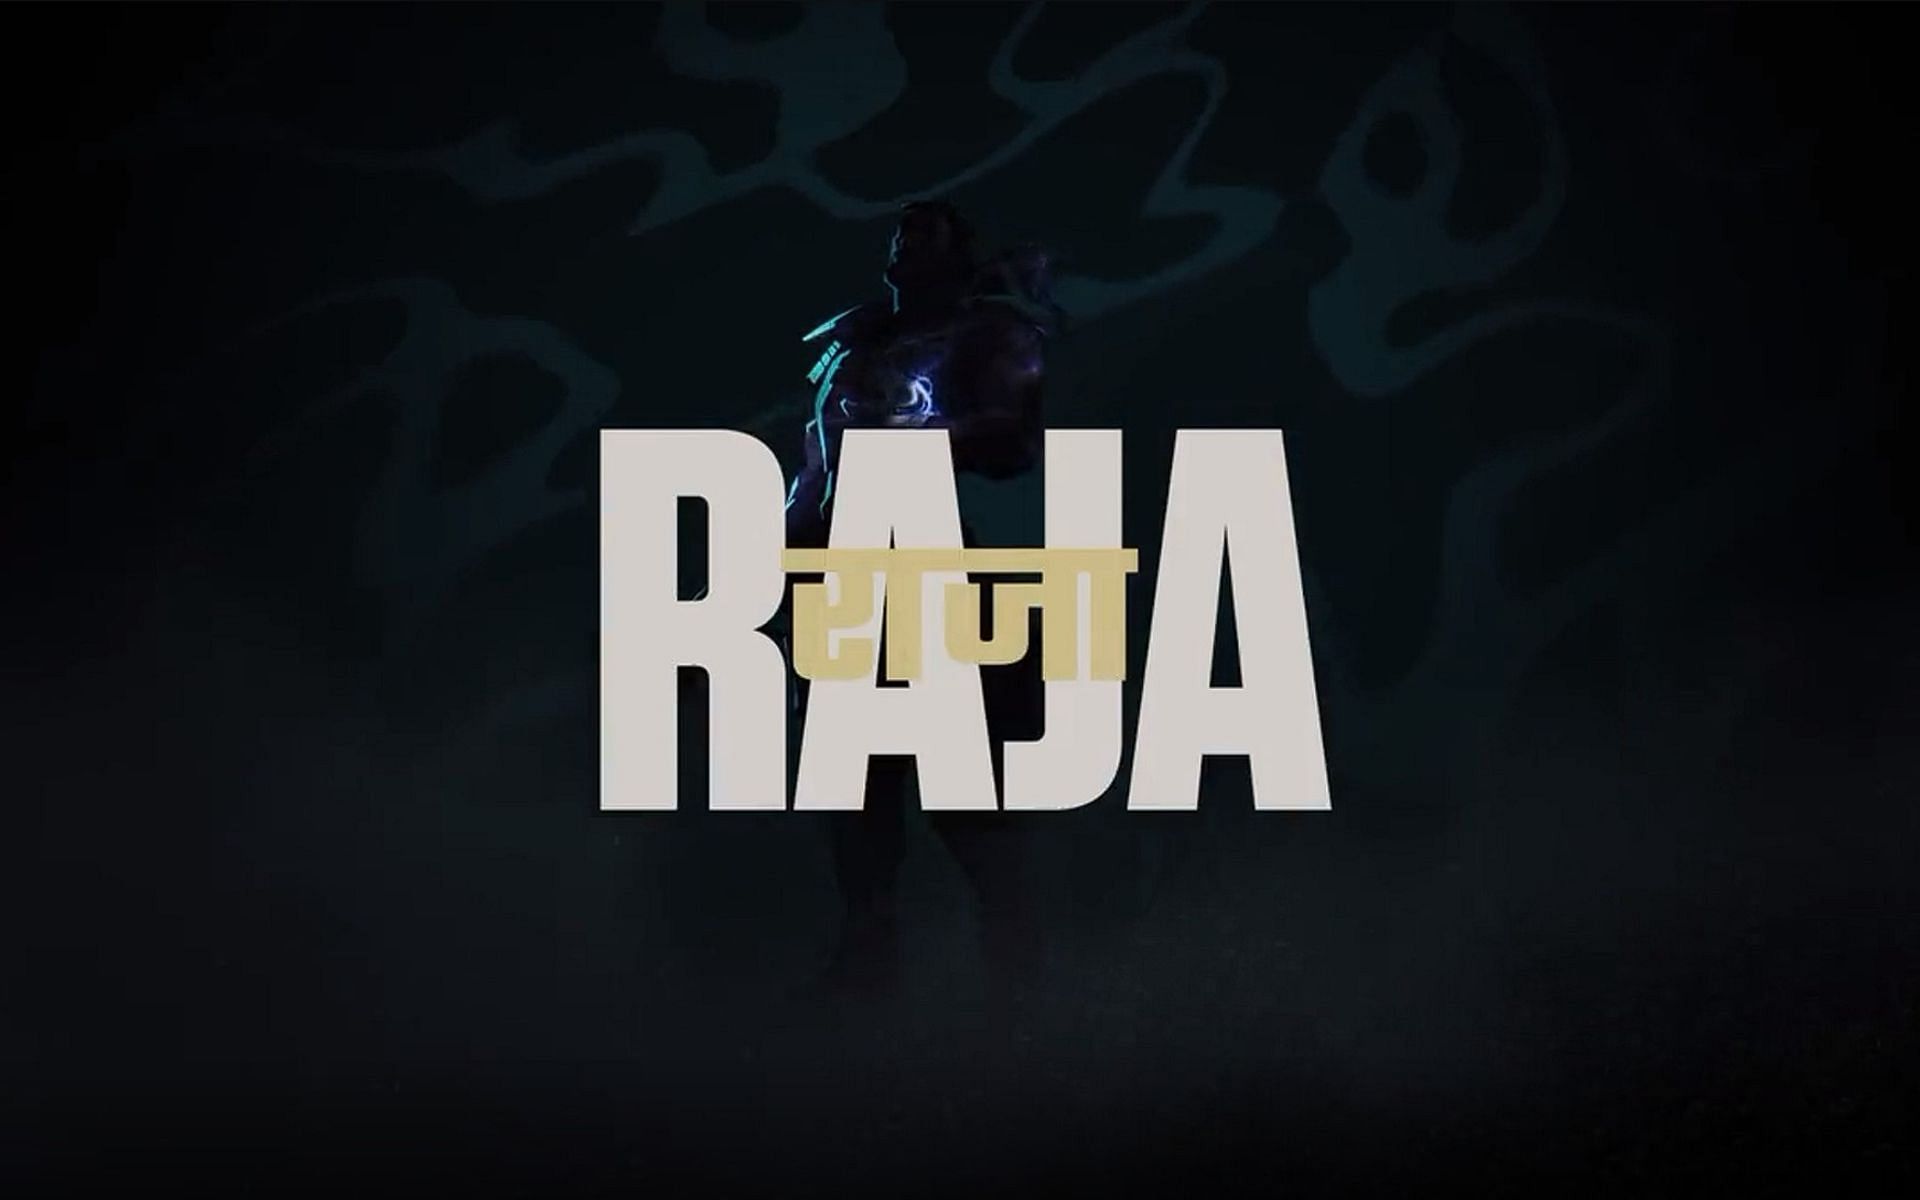 New Theme Music teased for Agent Batra (Image via Sportskeeda)